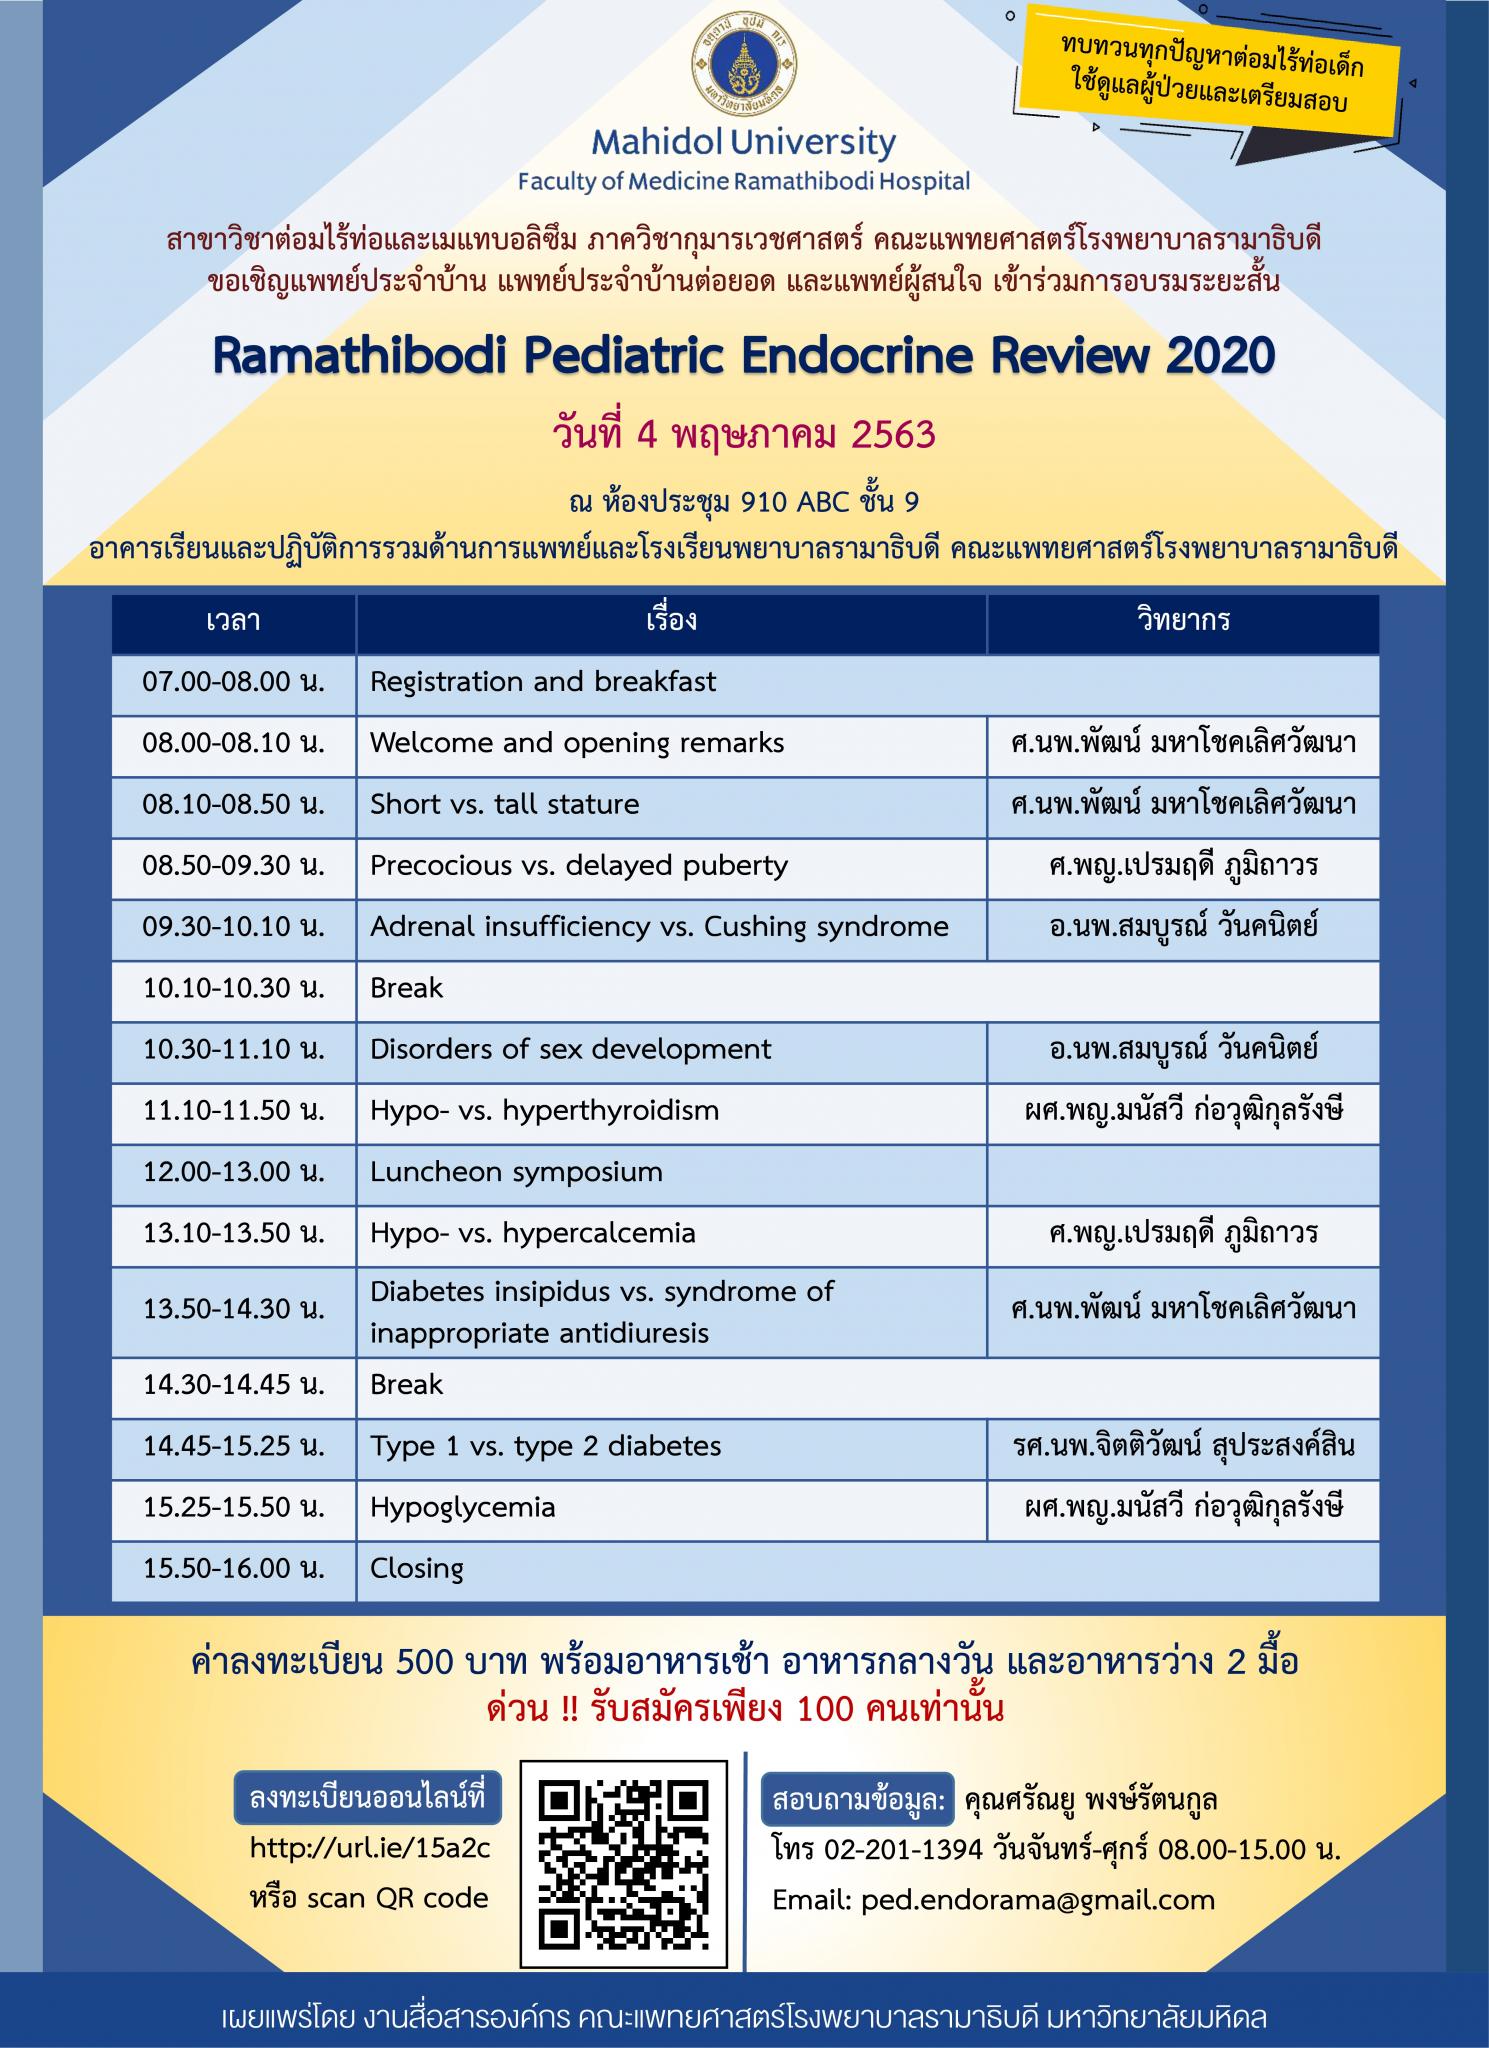 Ramathibodi Pediatric Endocrine Review 2020